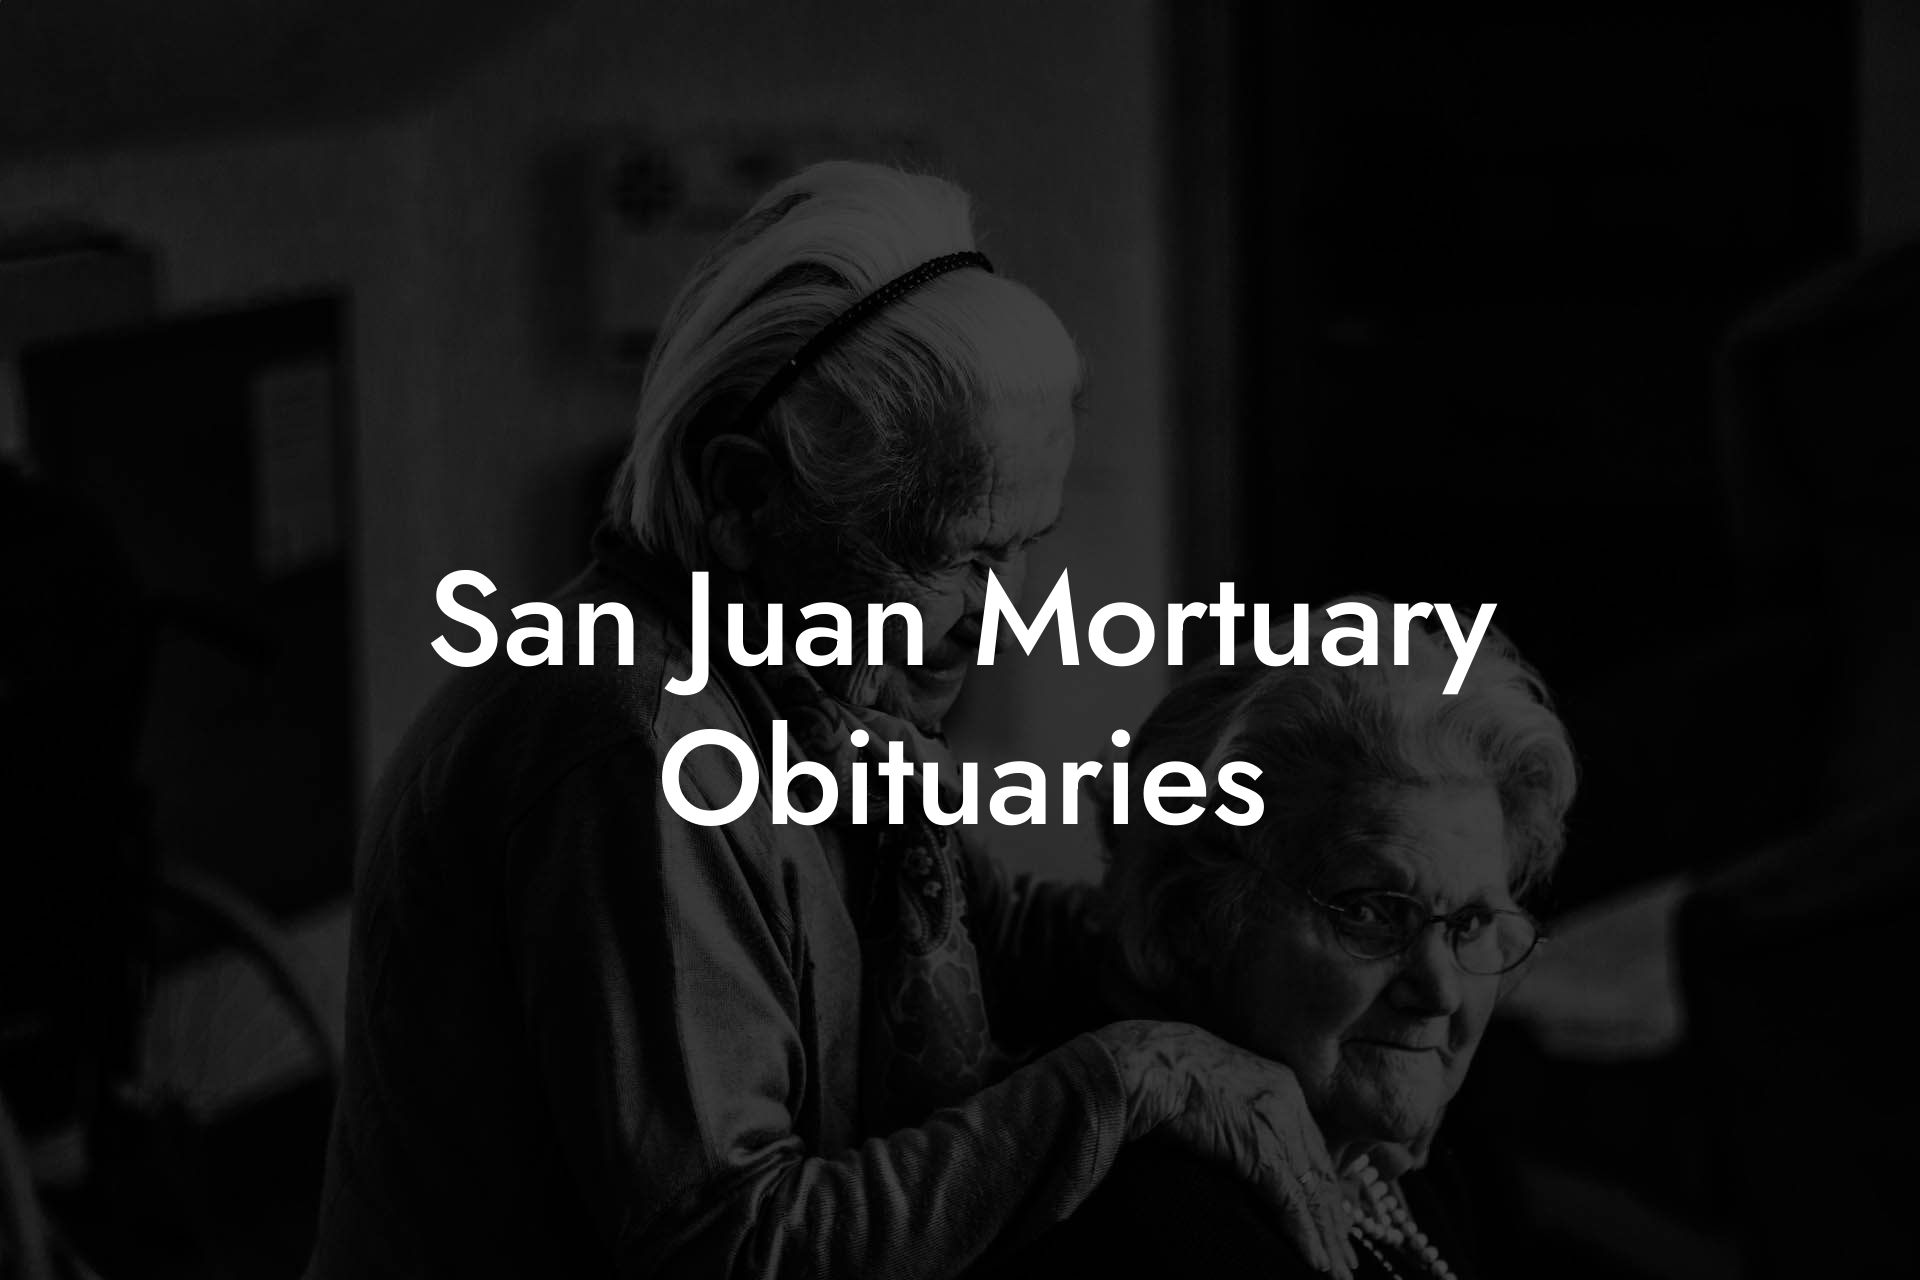 San Juan Mortuary Obituaries